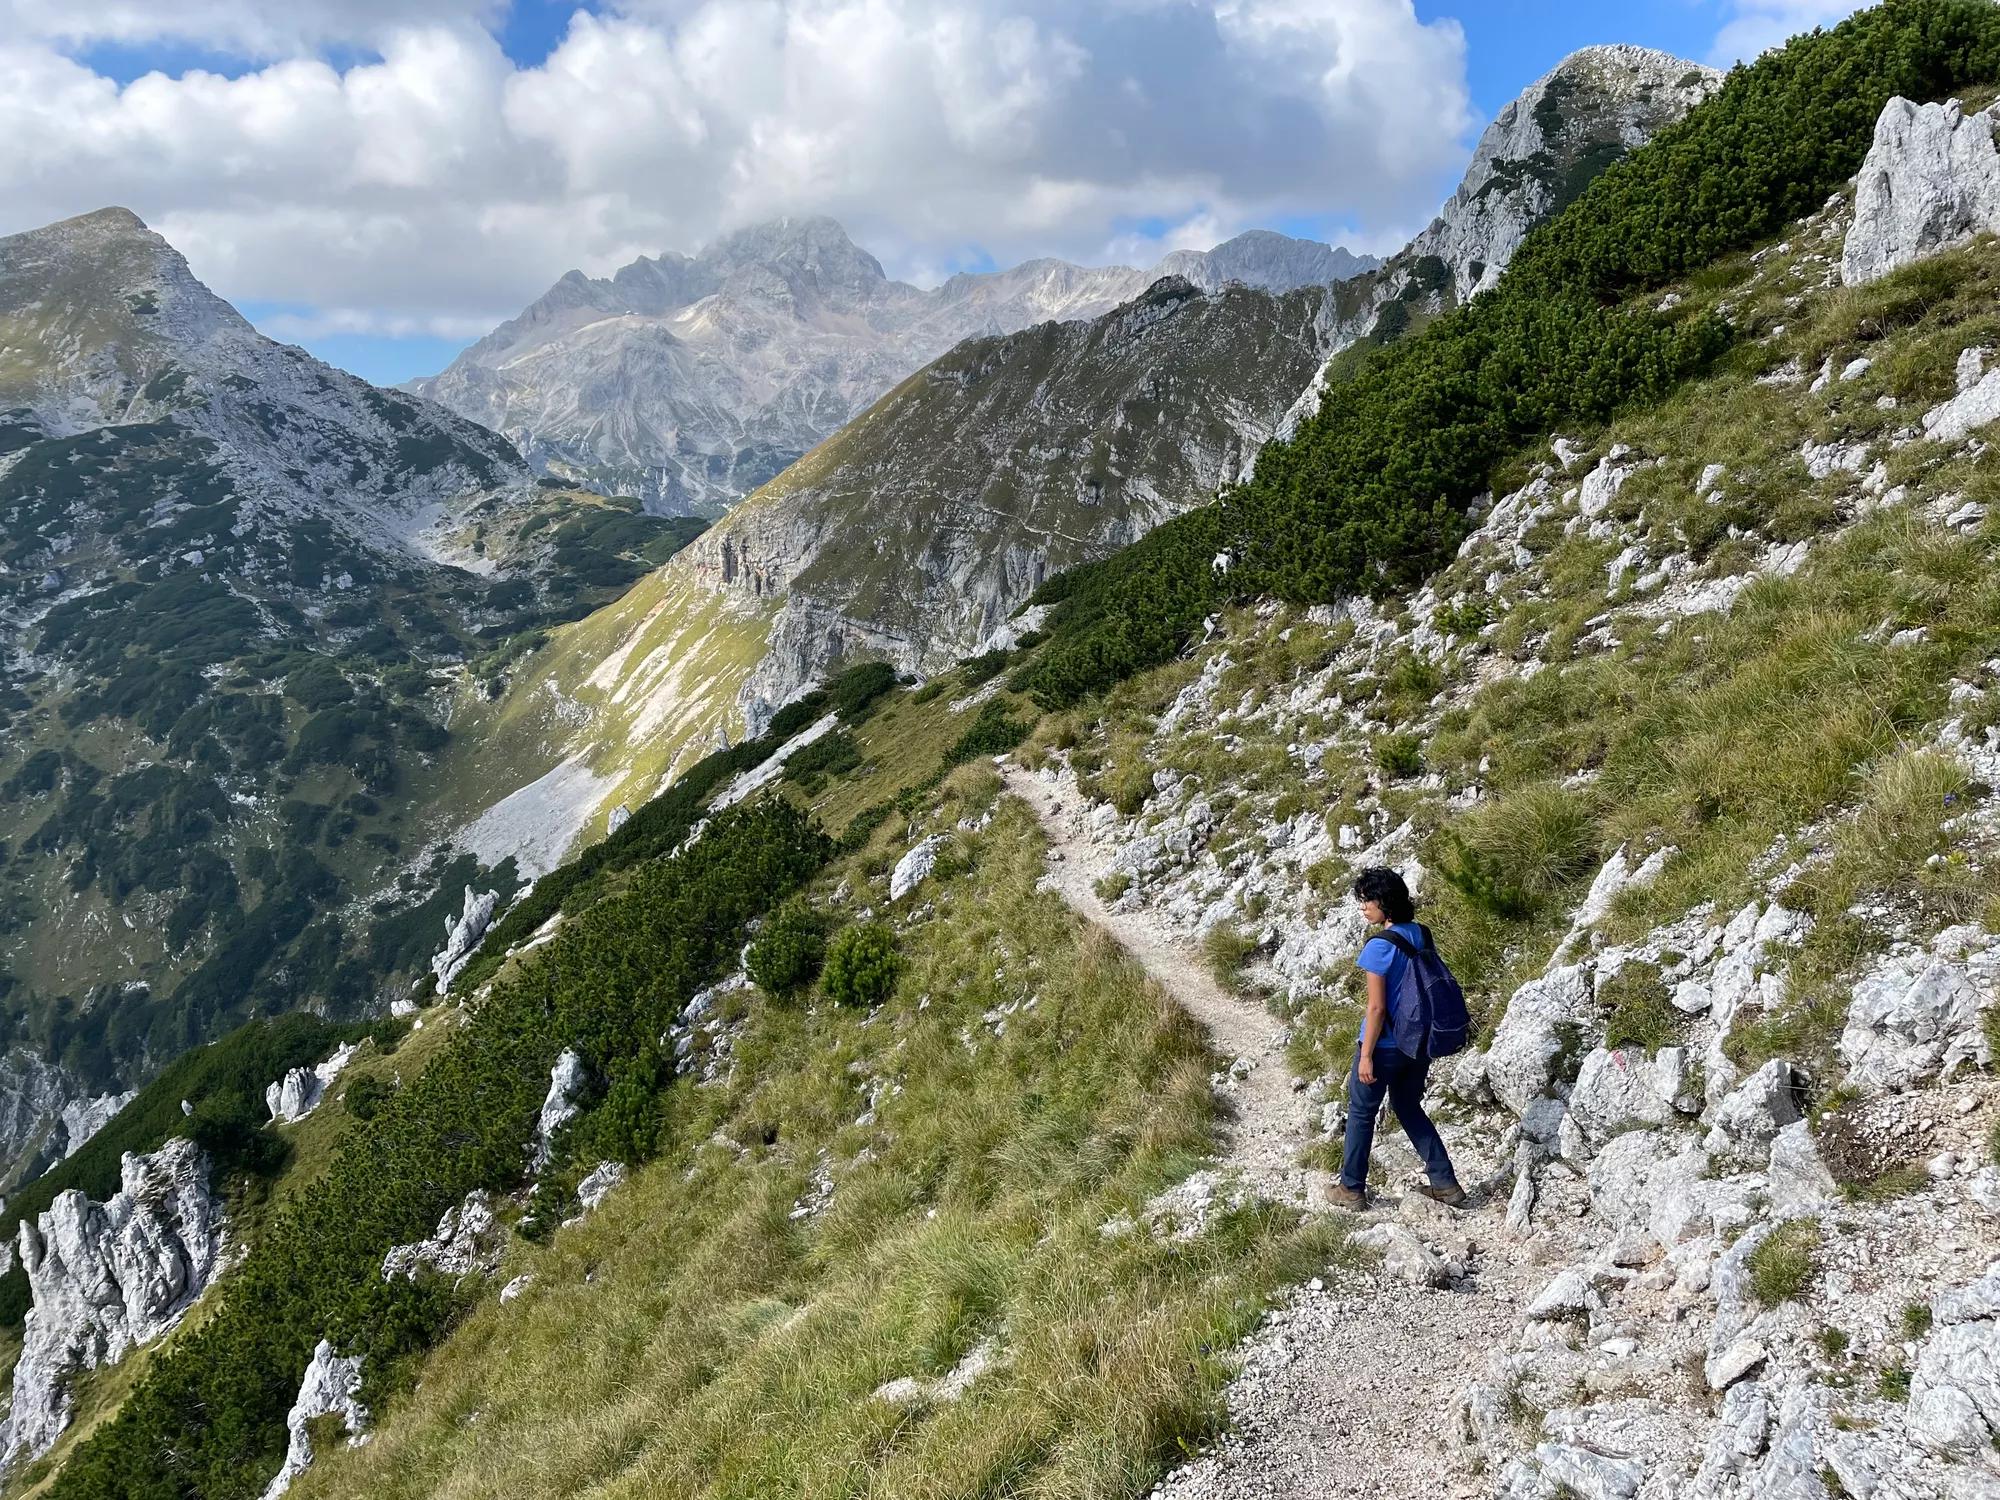 Michaela on a hike through mountainous landscape